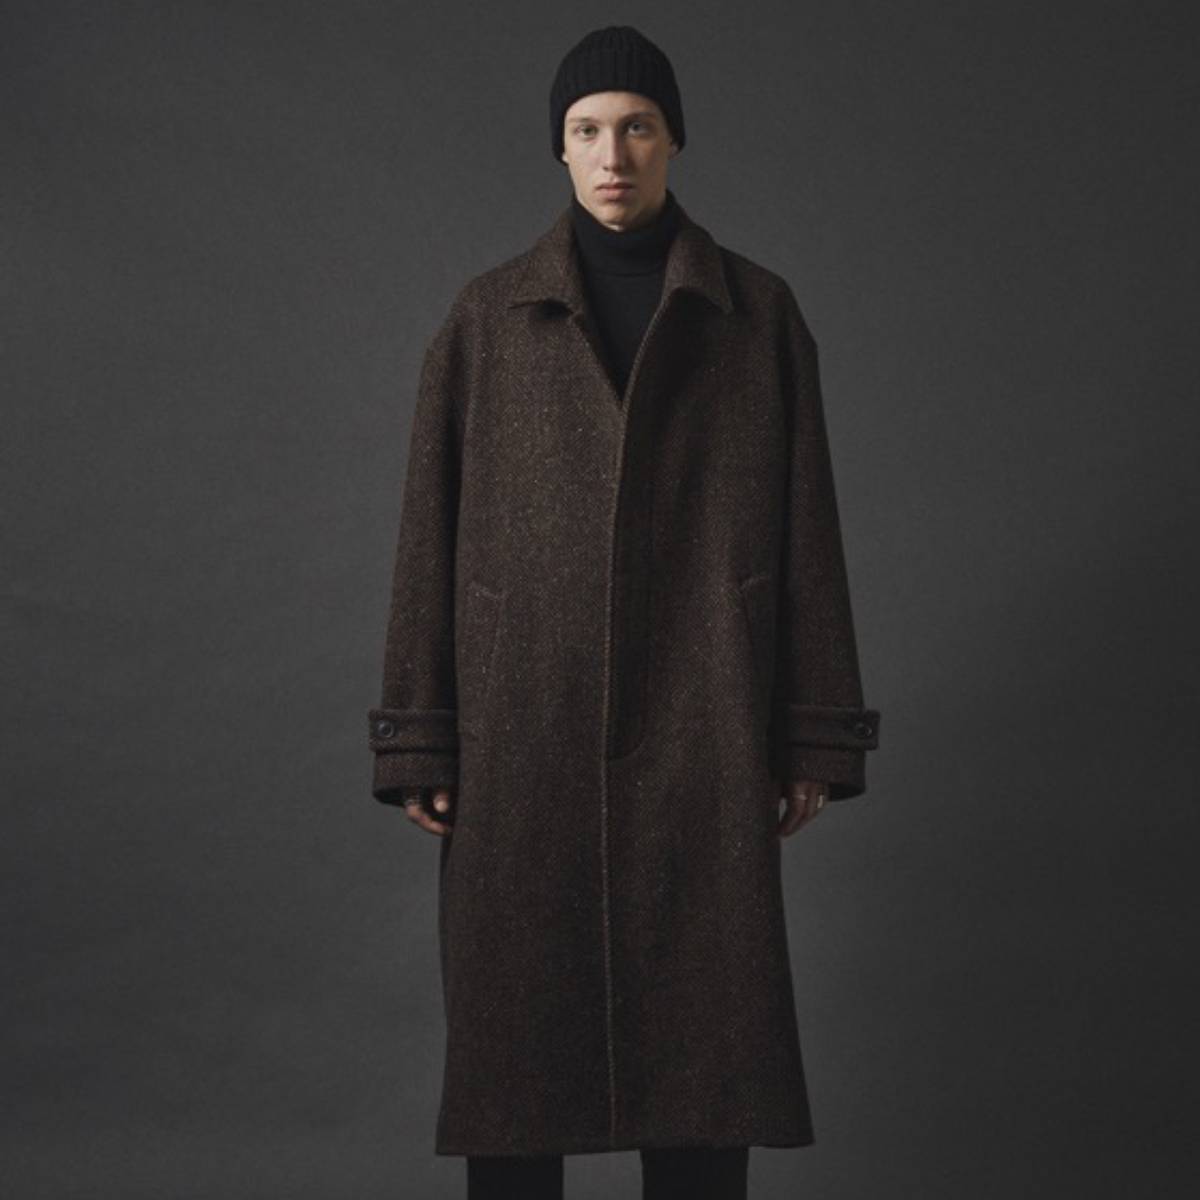 lownn Overcoat(Brown Herringbone) | lownn (ローン) - 通販 - FEEL